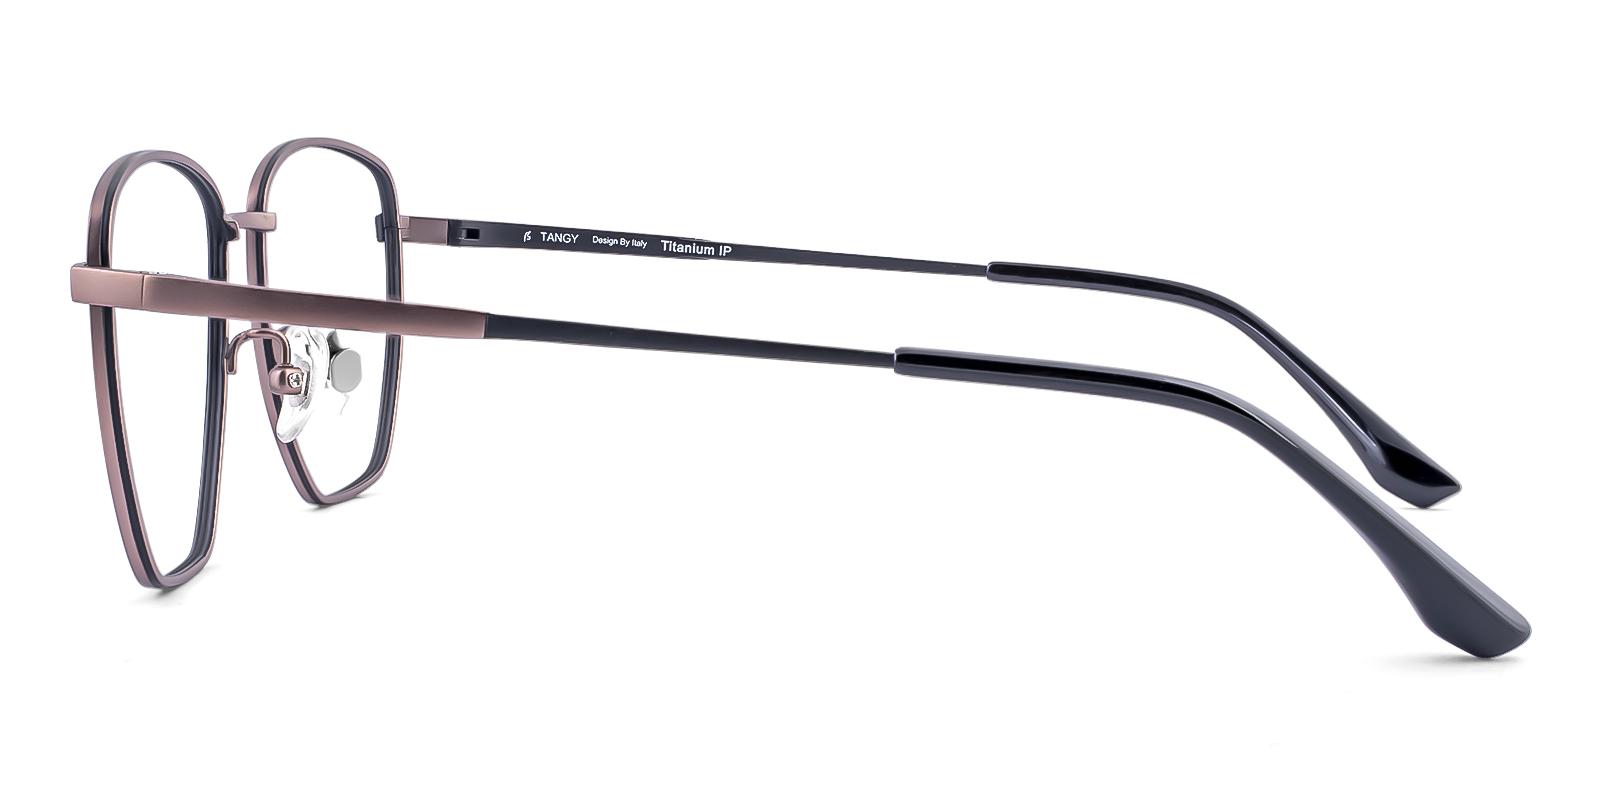 Errious Brown Titanium Eyeglasses , NosePads Frames from ABBE Glasses